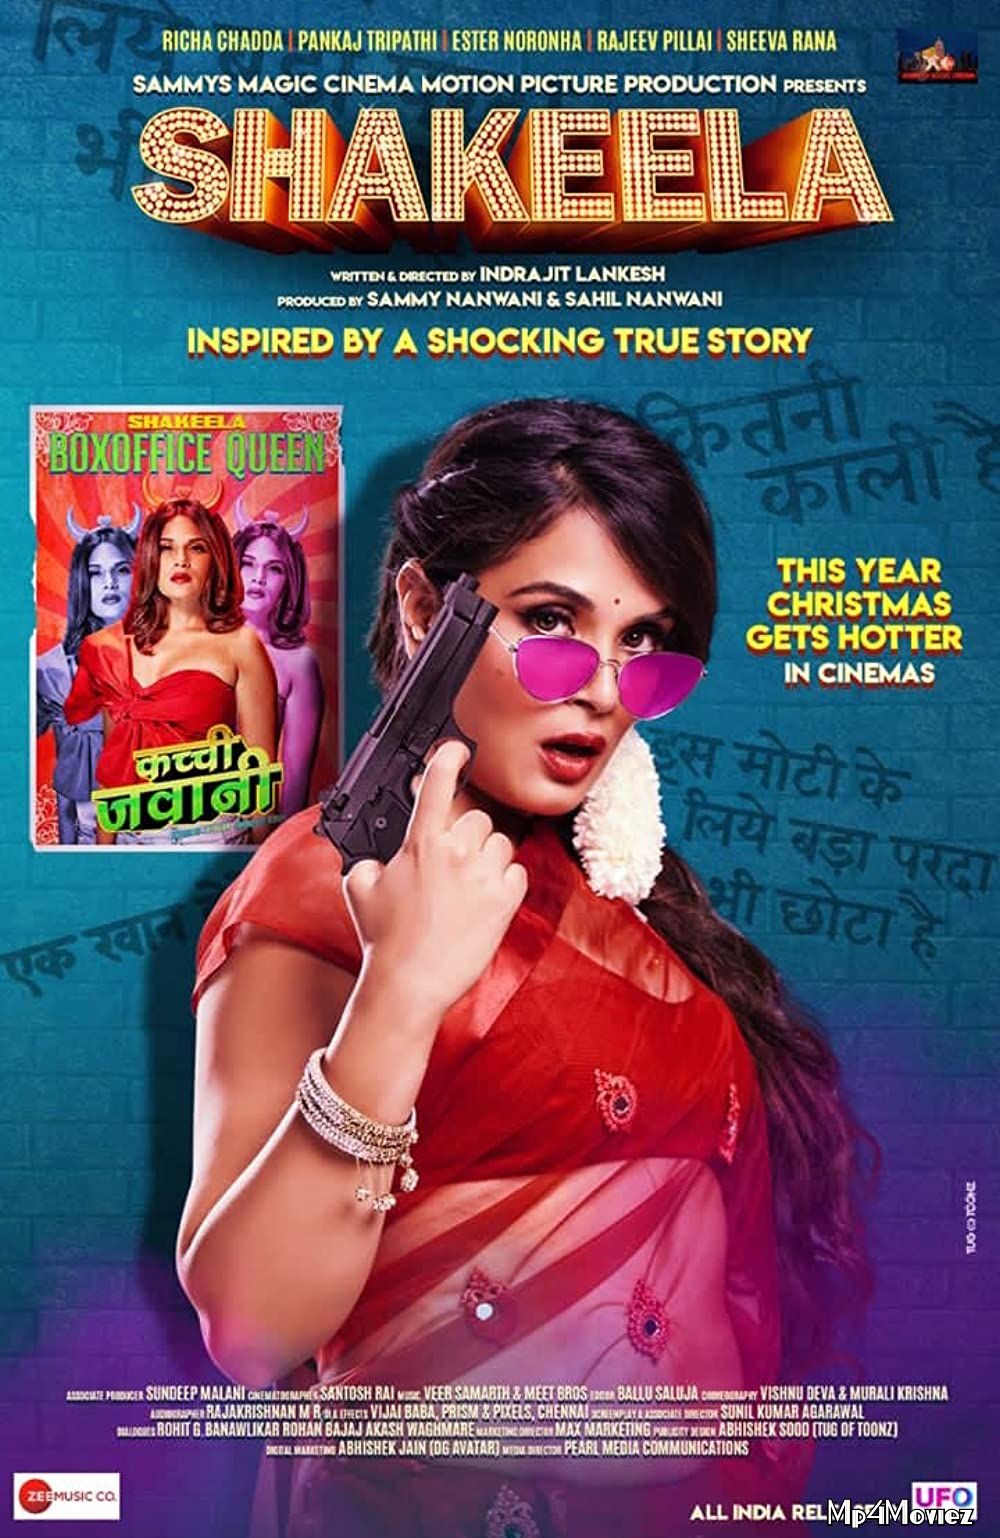 Shakeela 2020 Hindi Full Movie download full movie